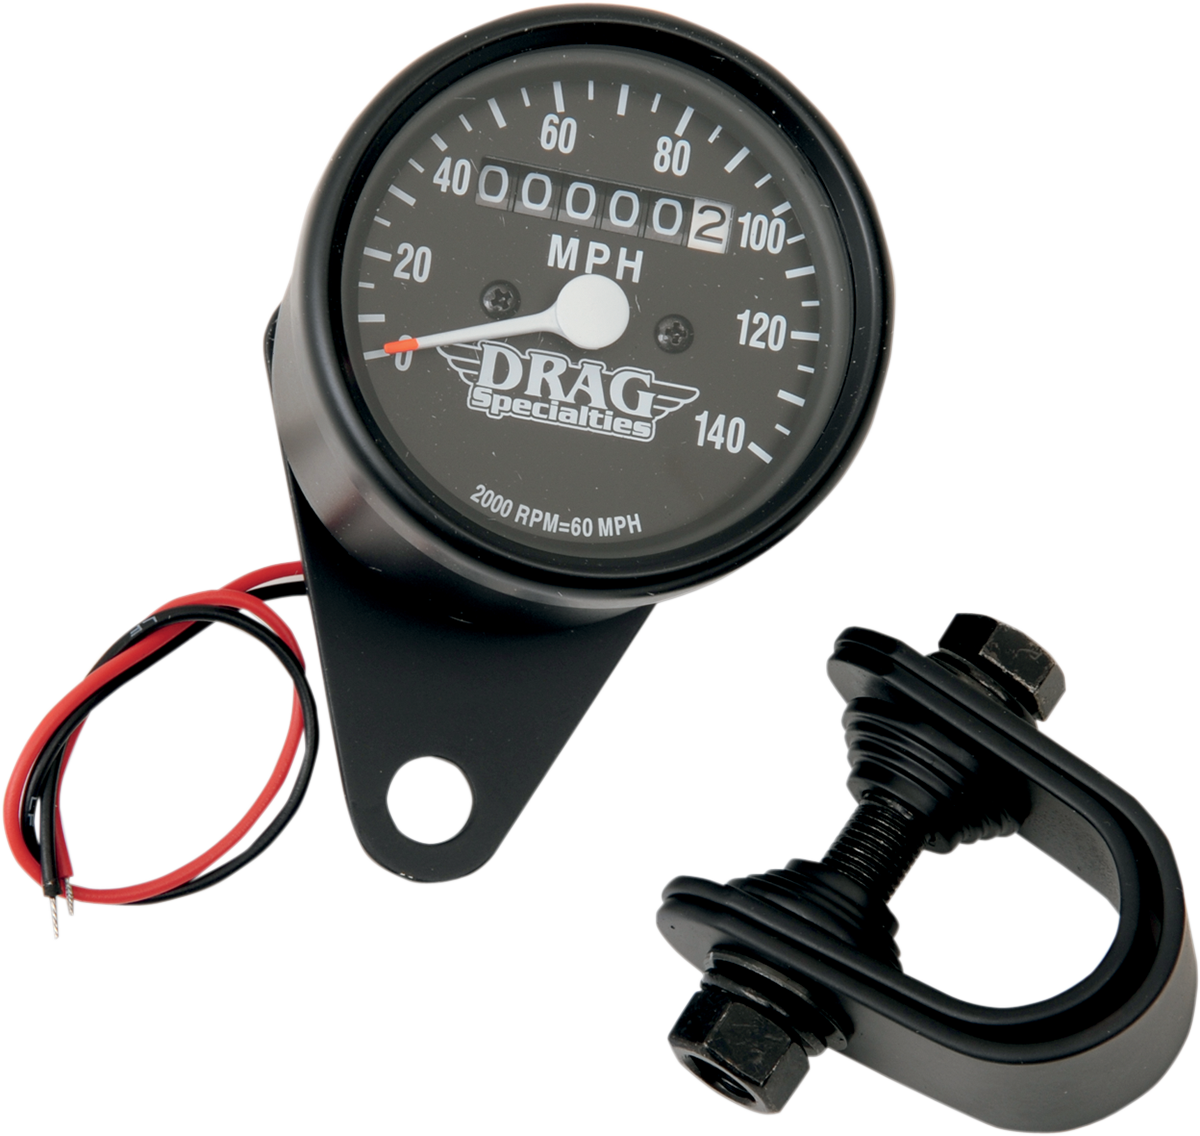 Drag Specialties 2:1 Black 140 MPH Mechanical Motorcycle Odometer Speedometer